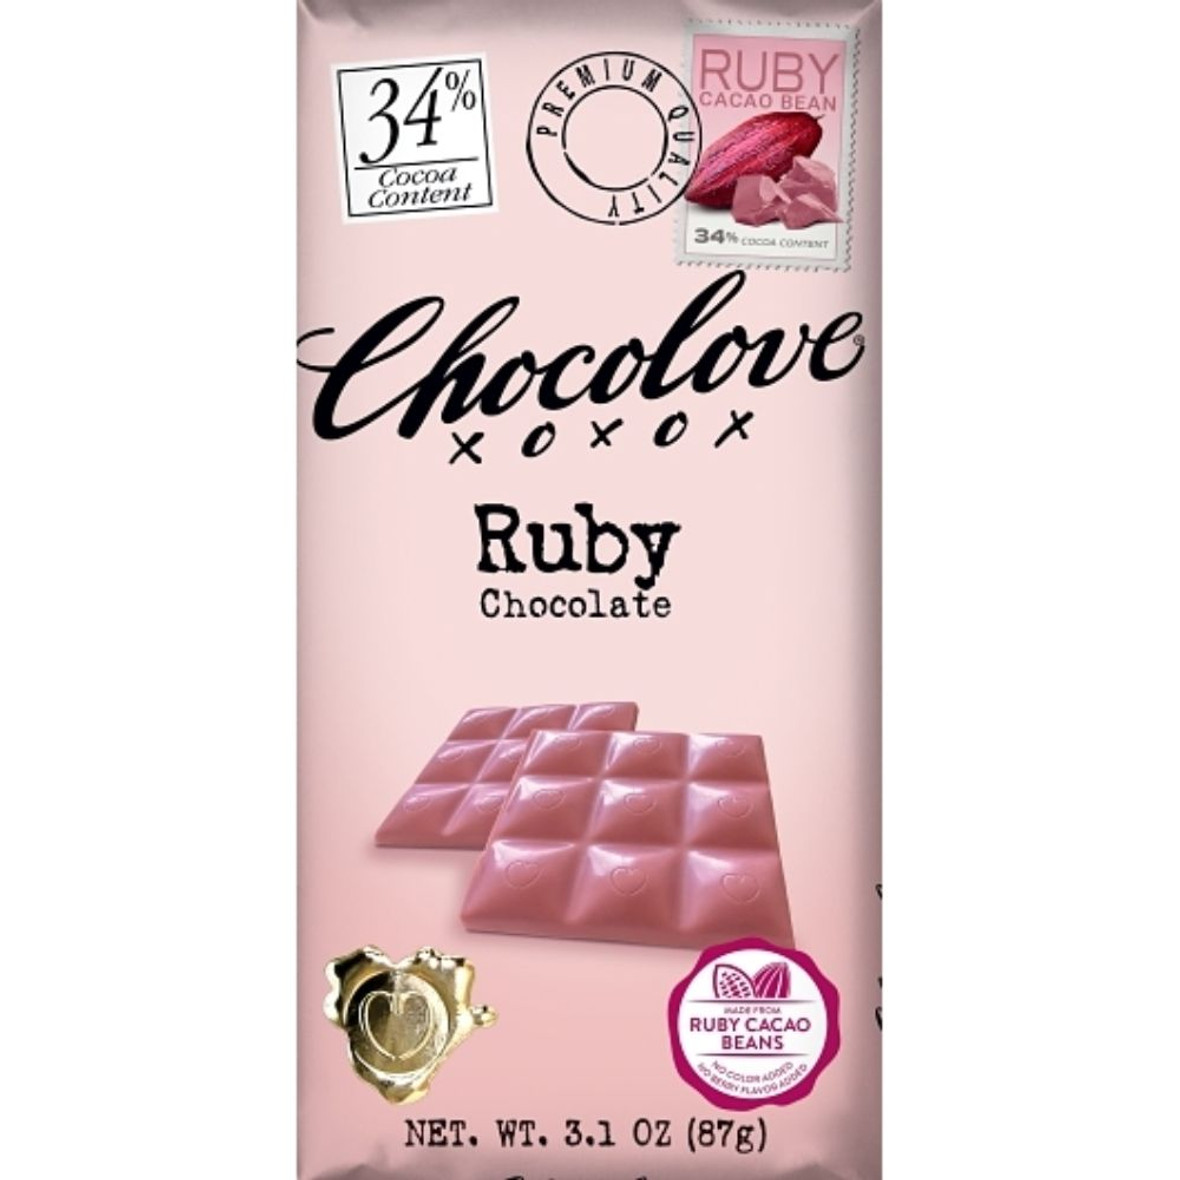 Chocolove 34% Ruby Cacao Bar